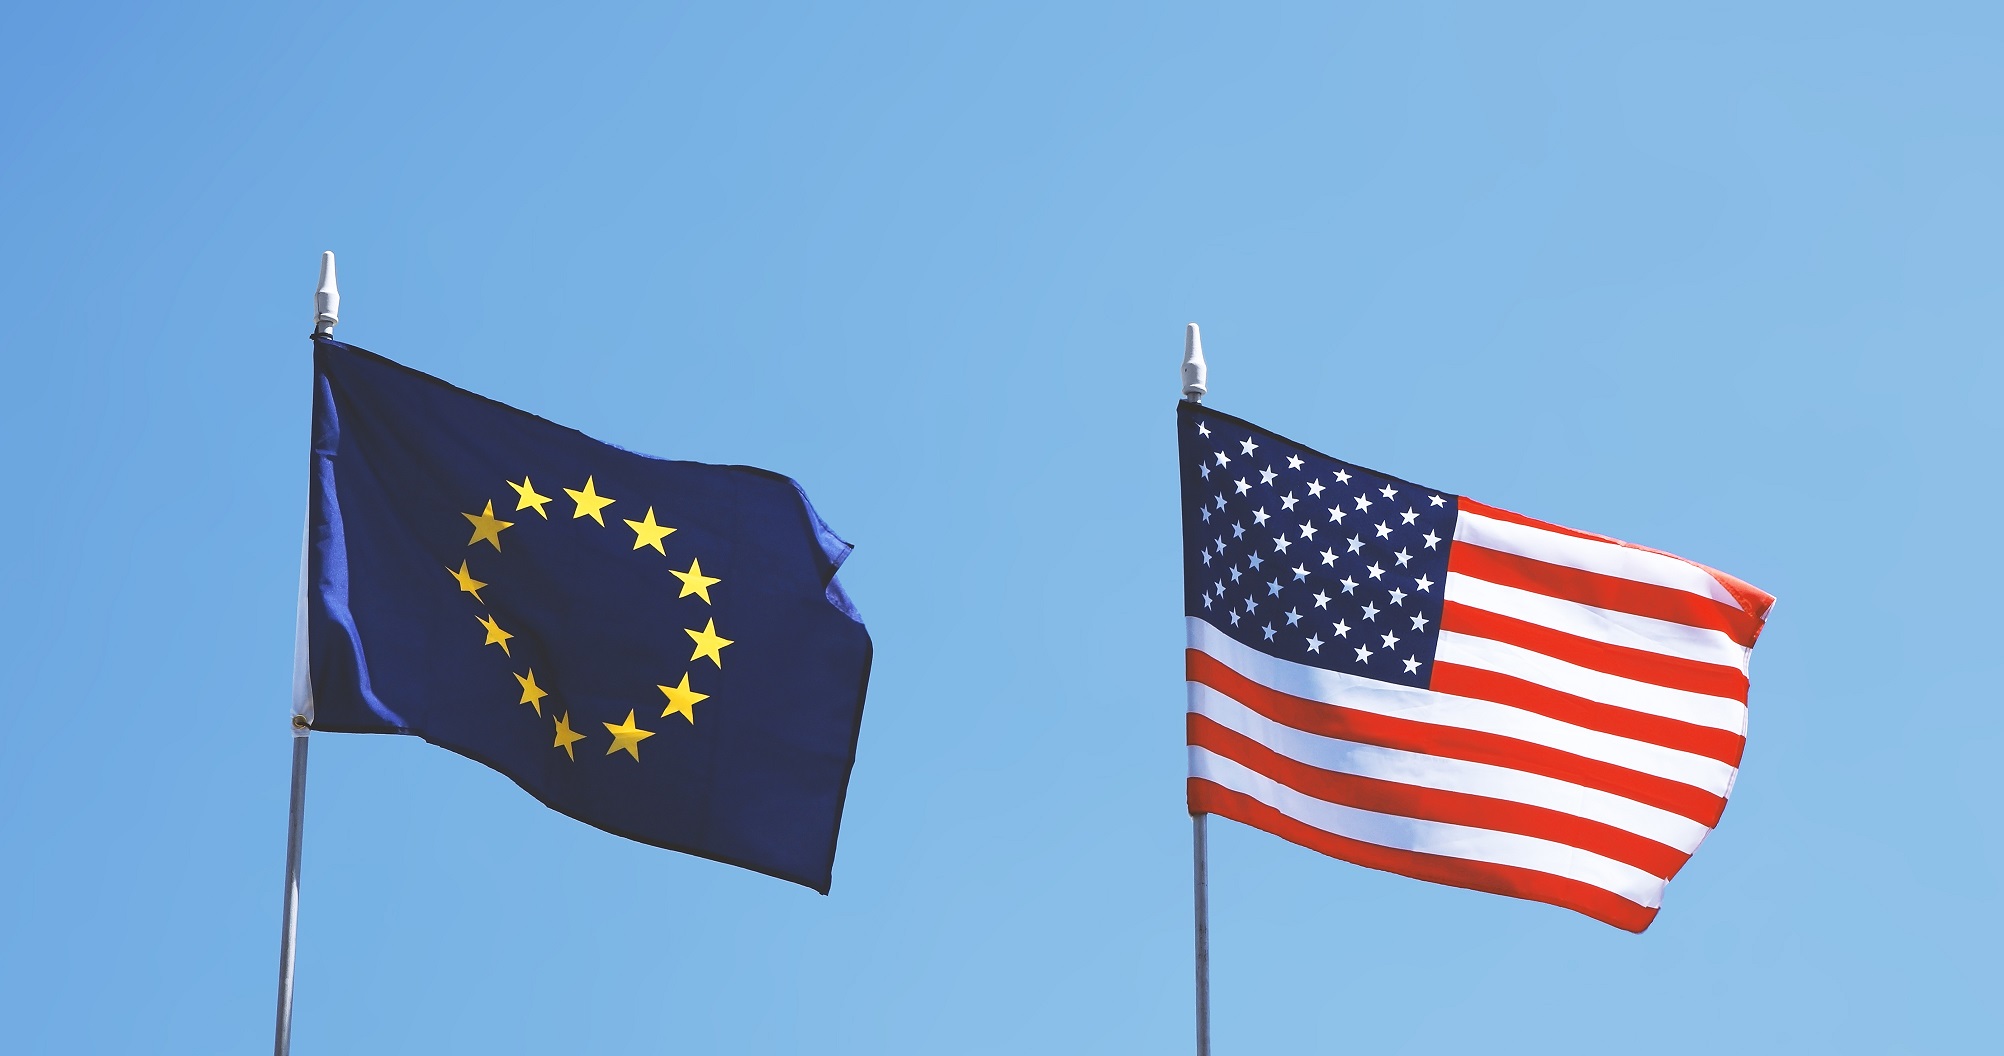 flags of europe and united states of america next 9WY37TZ новости Выборы 2020, Грузия-ЕС, Грузия-США, посольство США